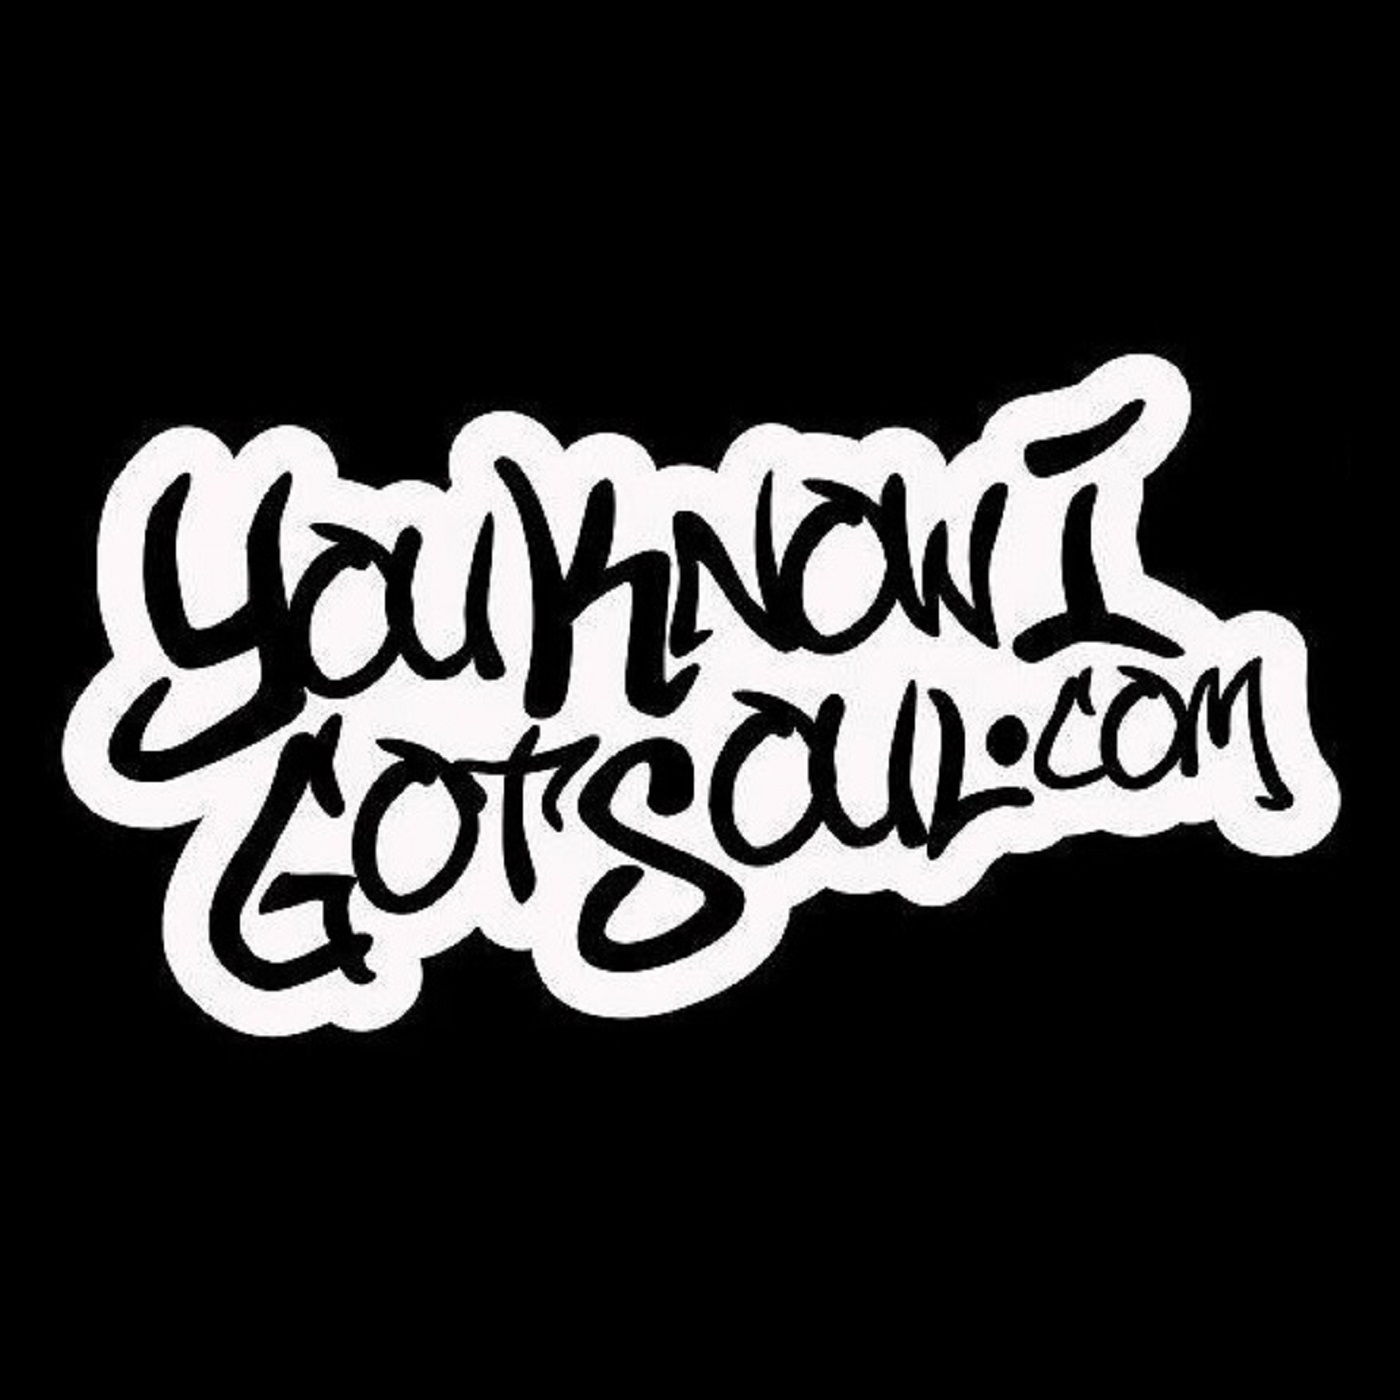 For Some Reason Keyshia Cole Hates Us - YouKnowIGotSoul R&B Podcast Episode #40